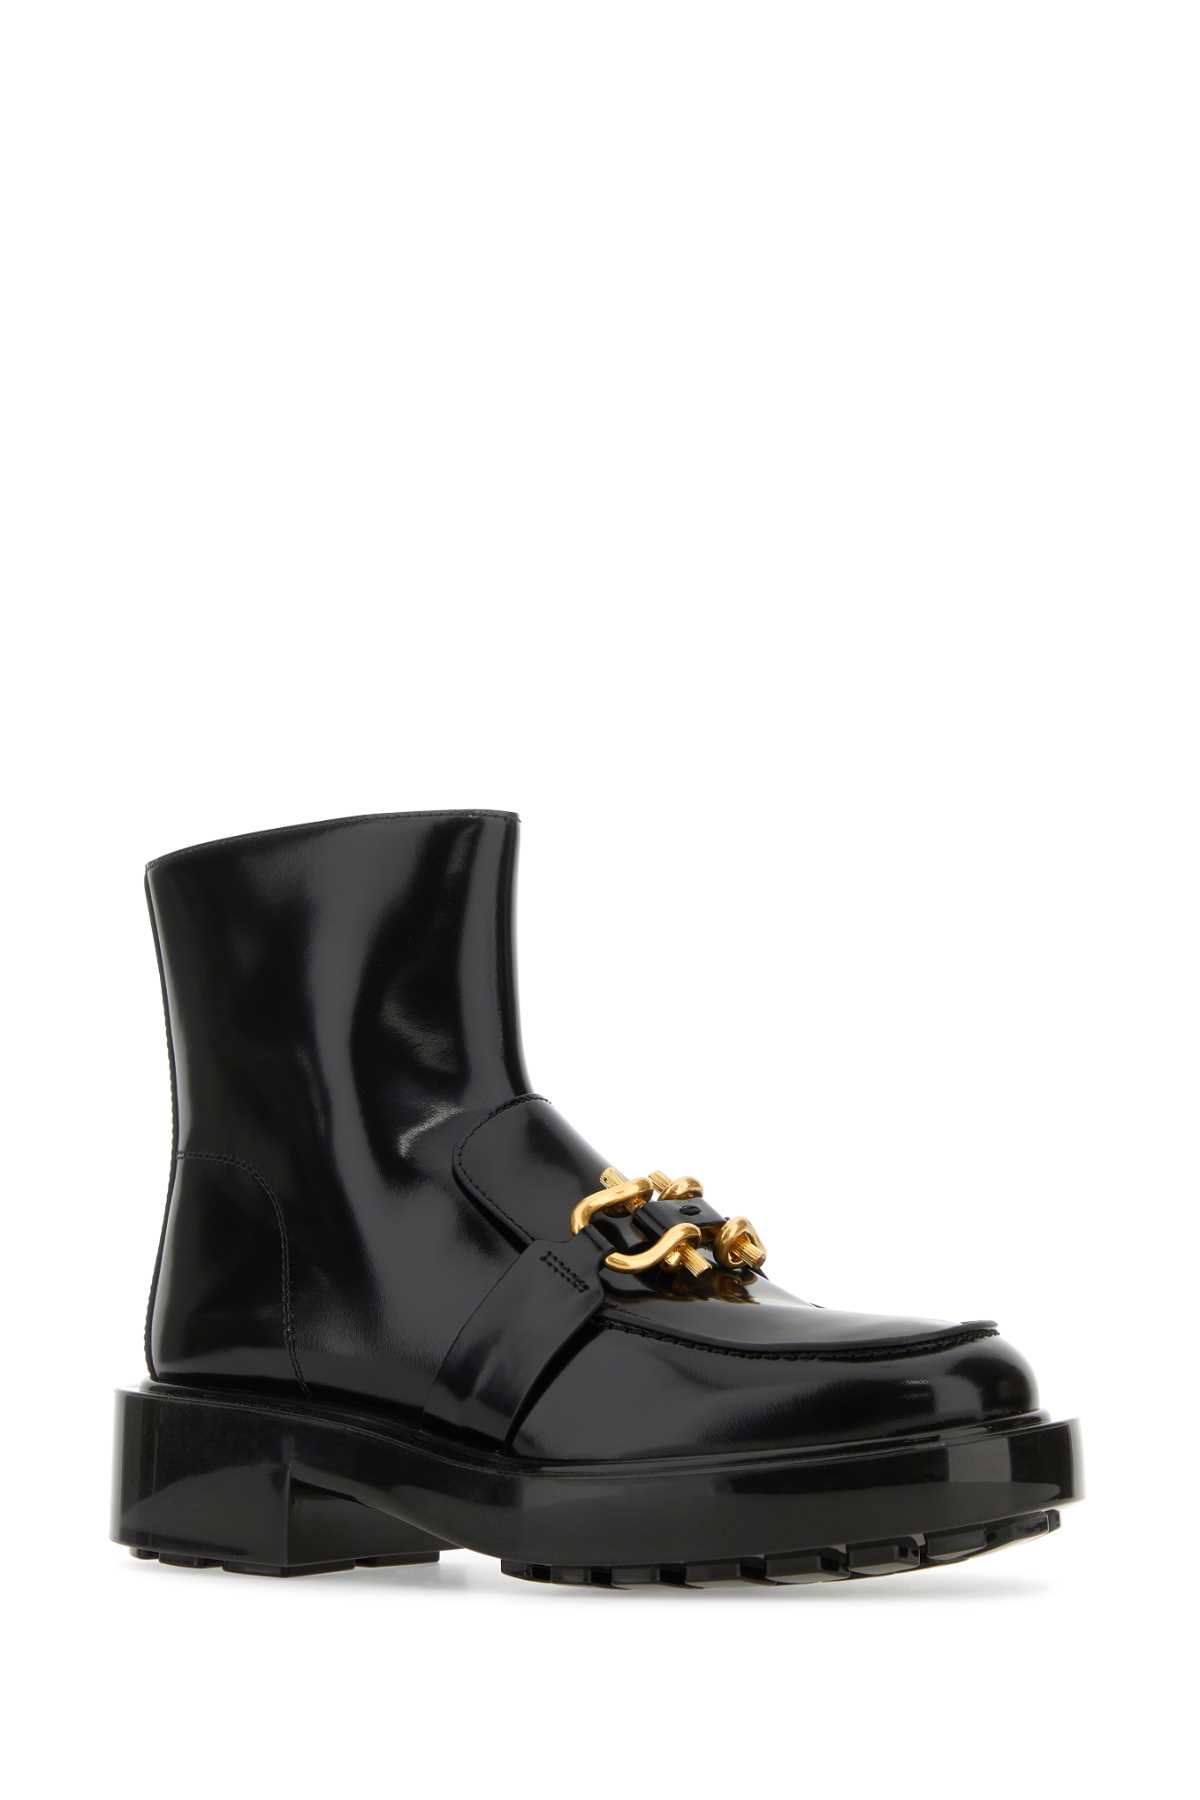 Bottega Veneta Black Leather Monsieur Ankle Boots